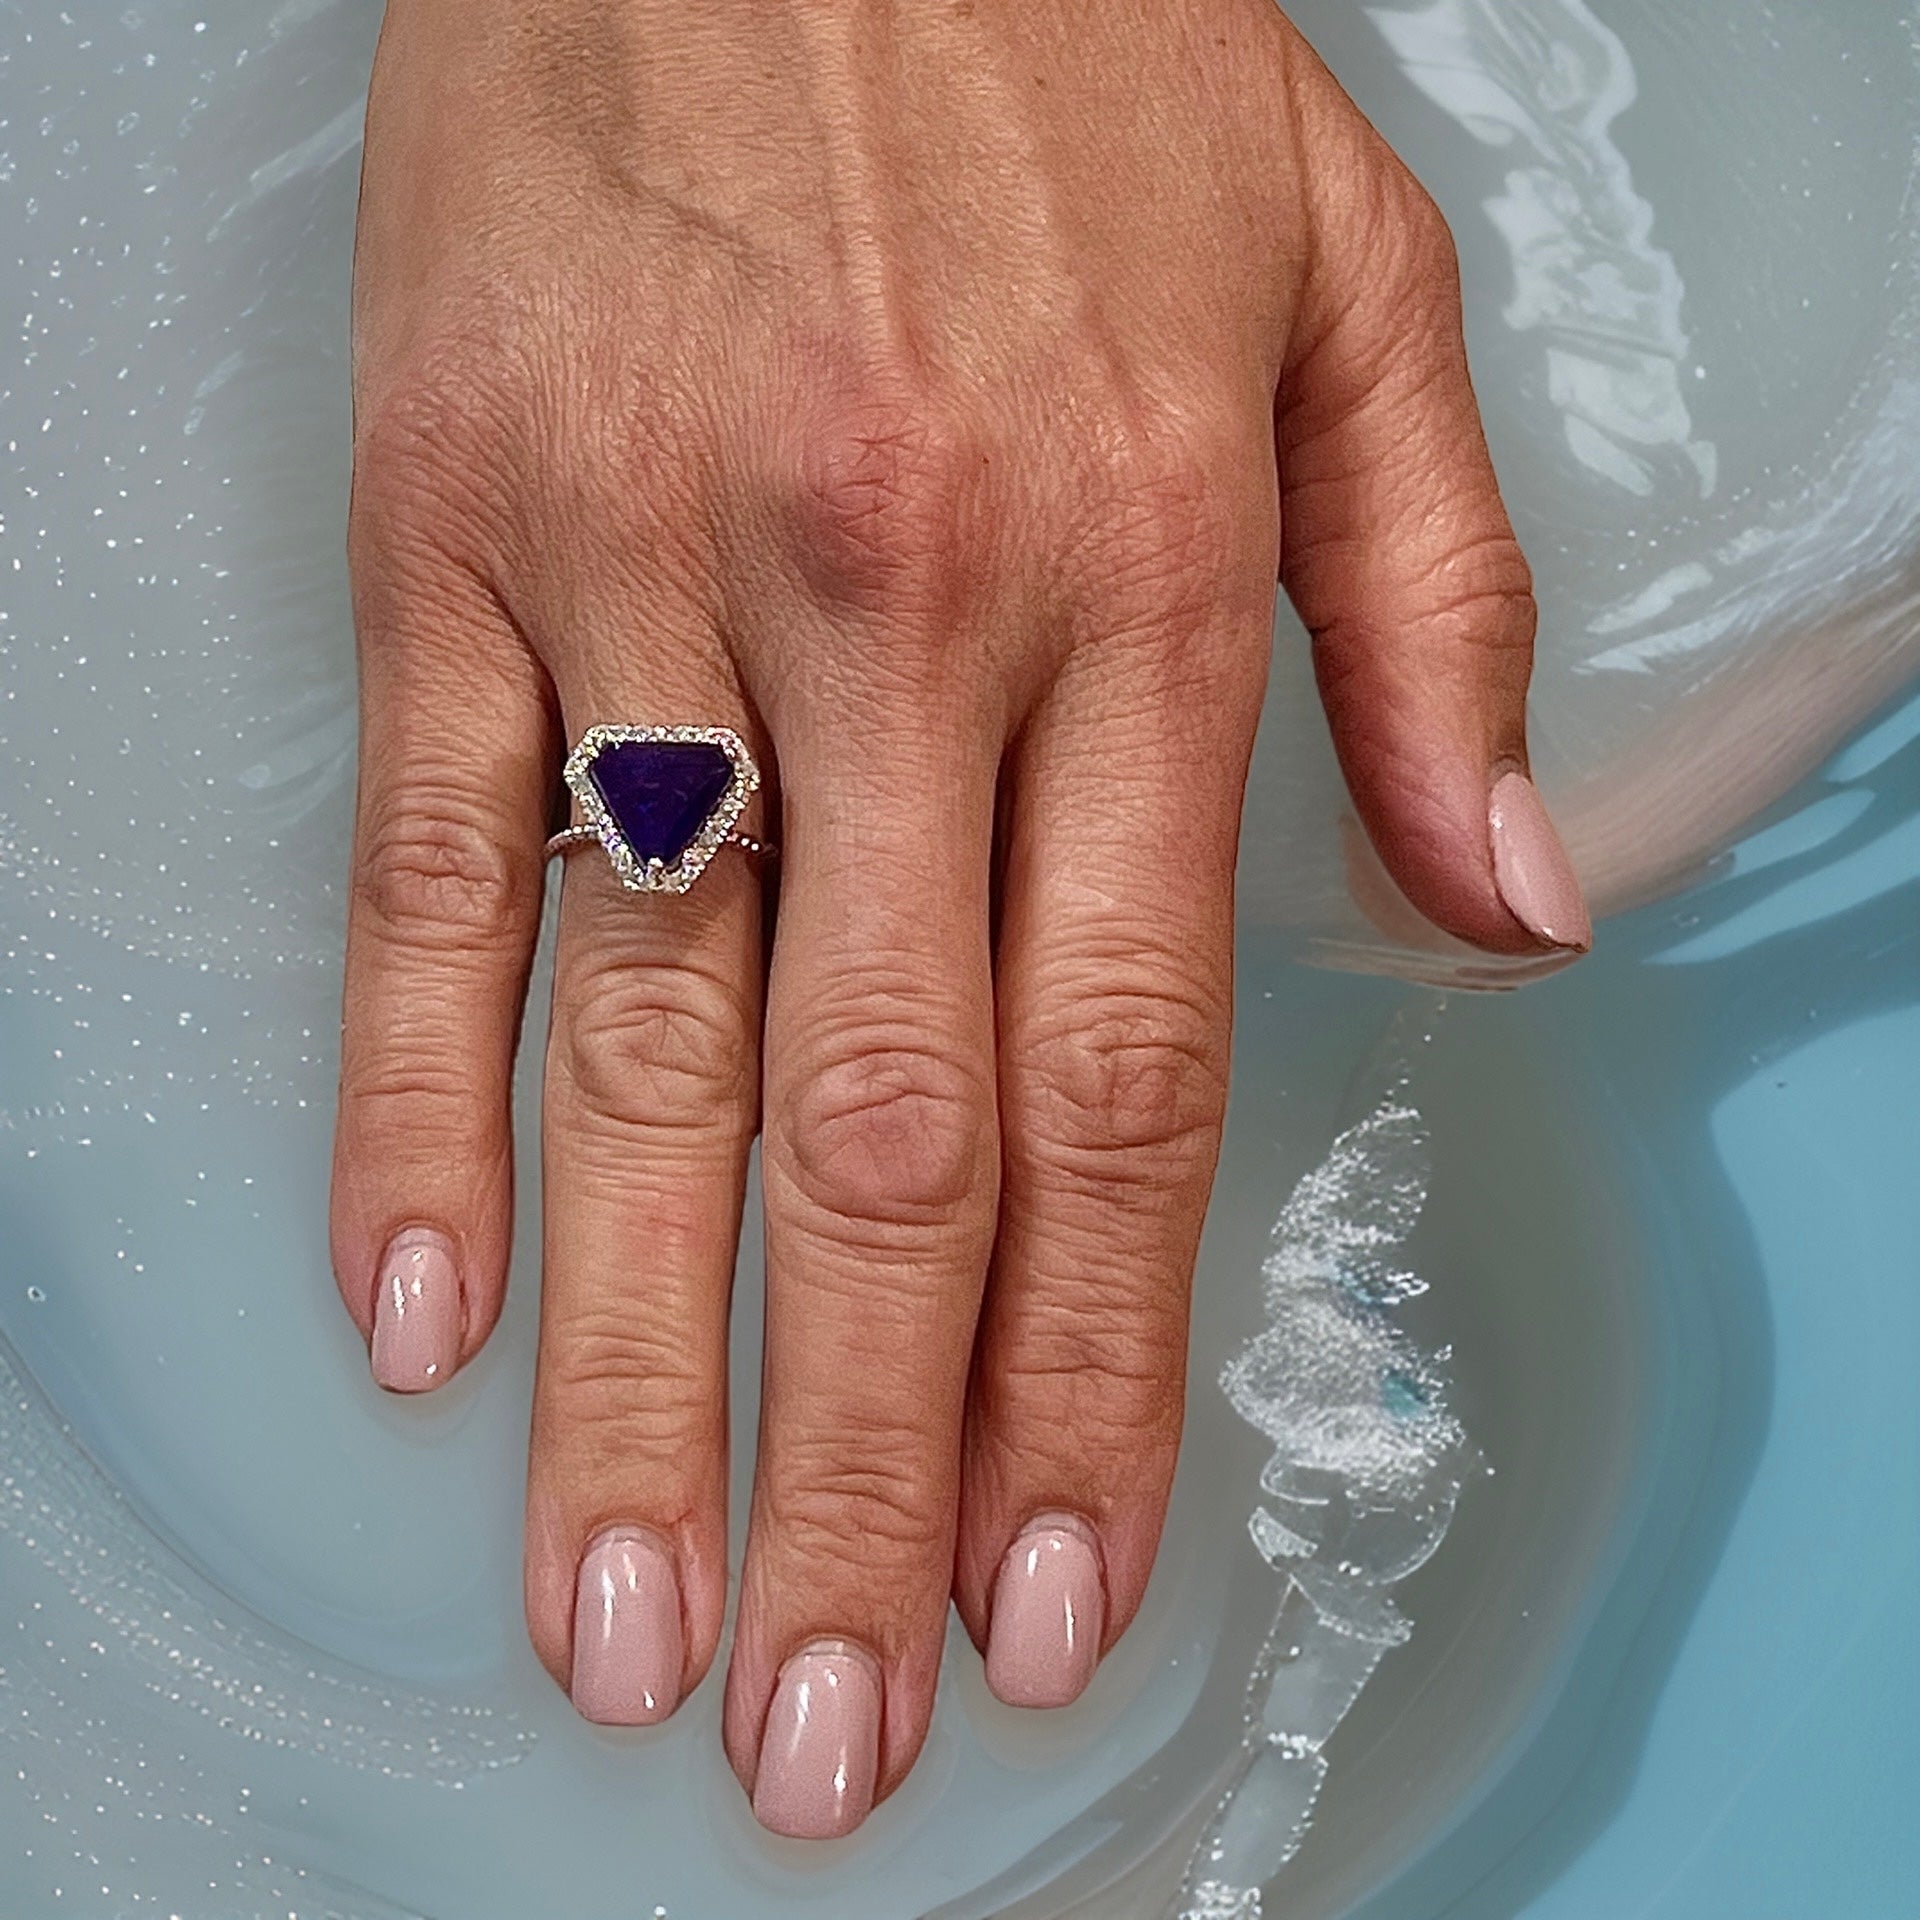 Natural Sapphire Diamond Ring 6.5 14k W Gold 5.84 TCW Certified $5,950 310654 - Certified Fine Jewelry